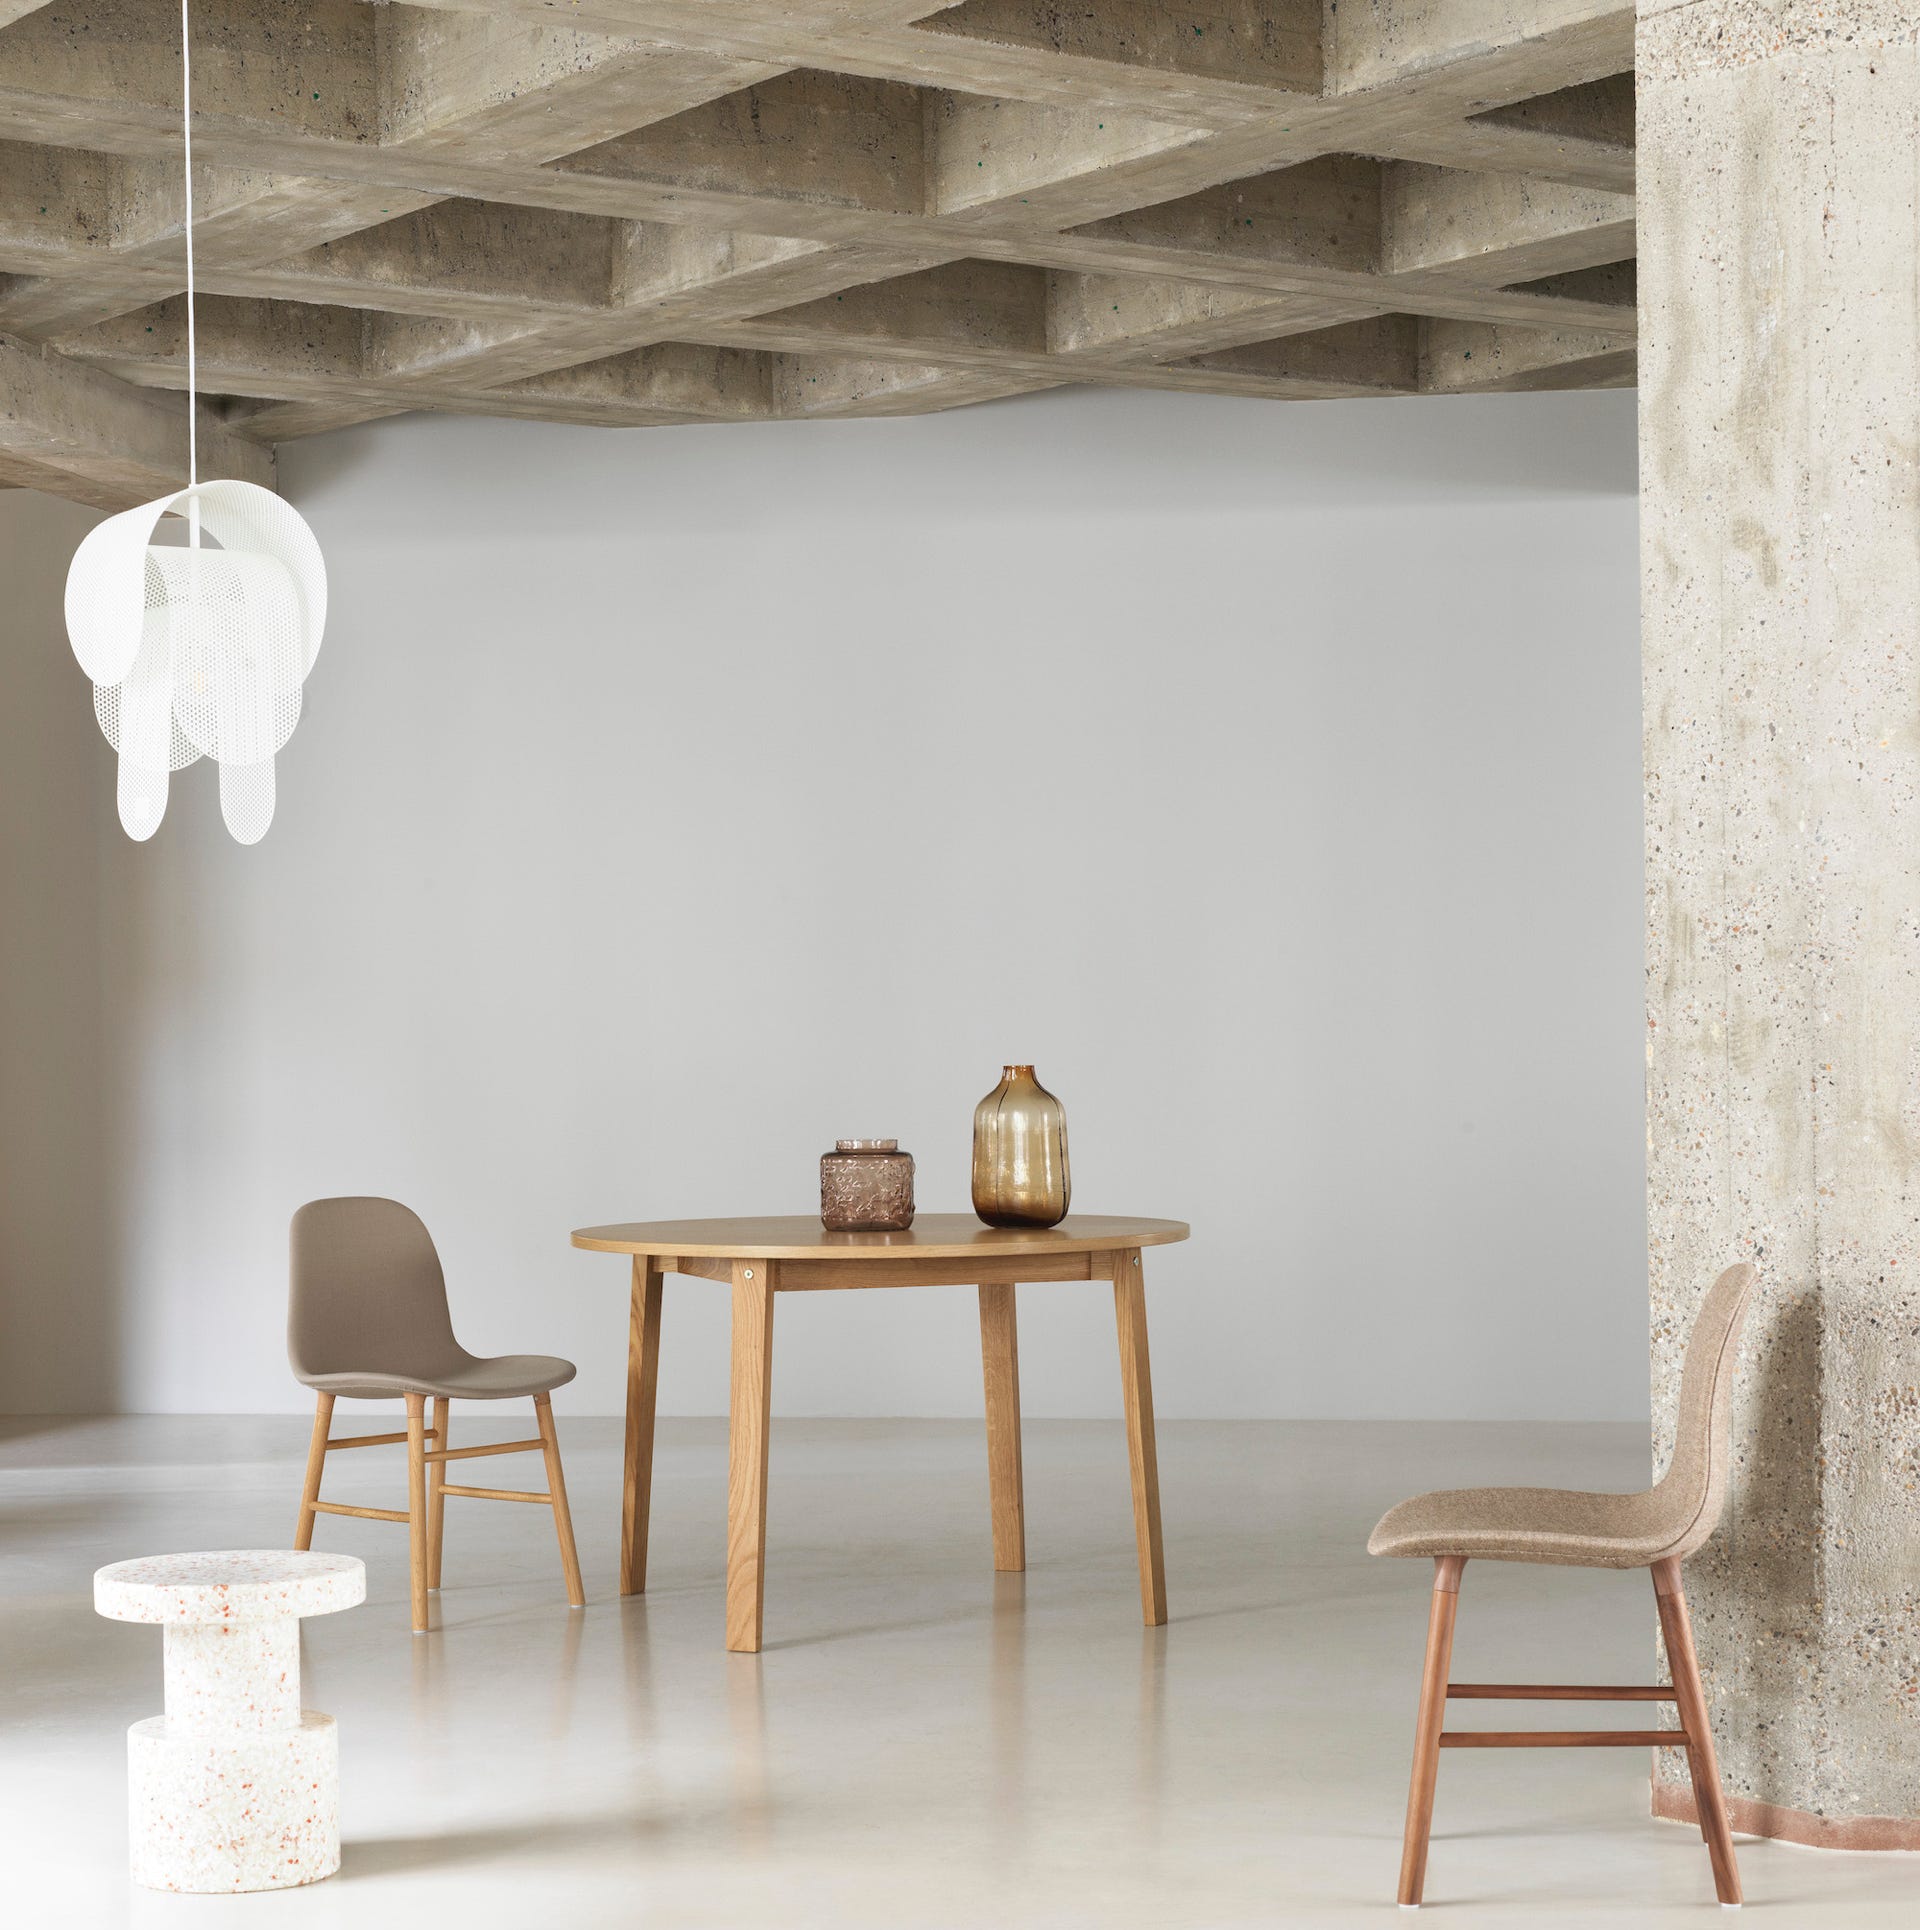 Superpose pendant Frederik Kurzweg Design Studio, 2020 